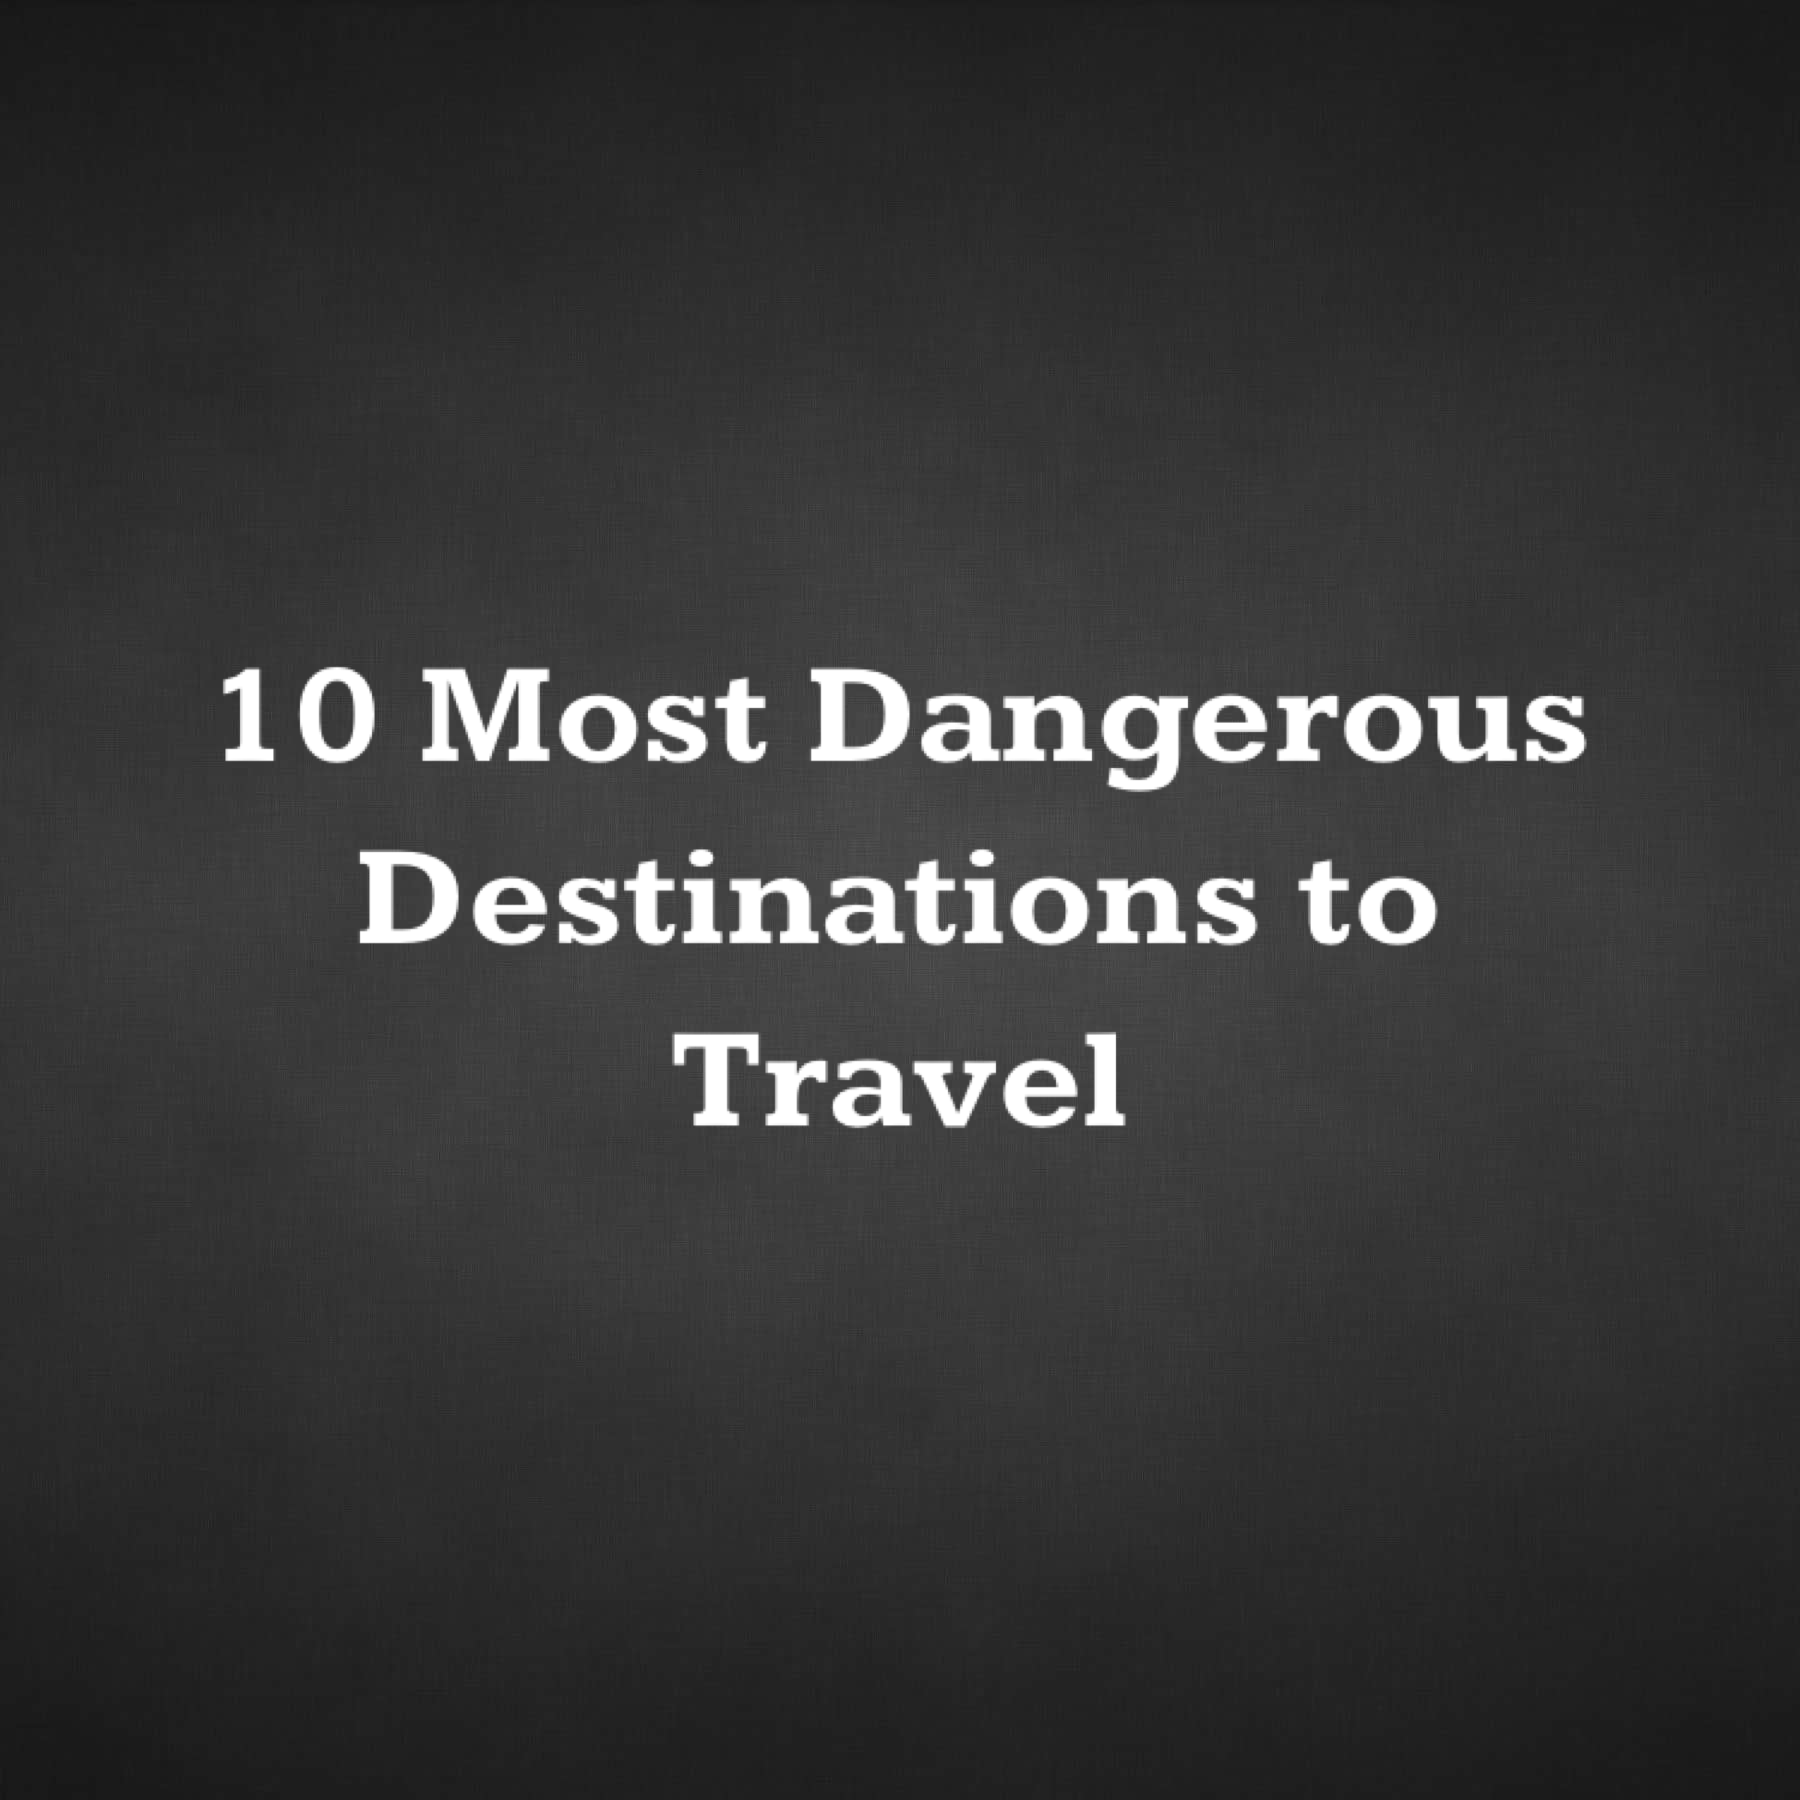 travel is dangerous